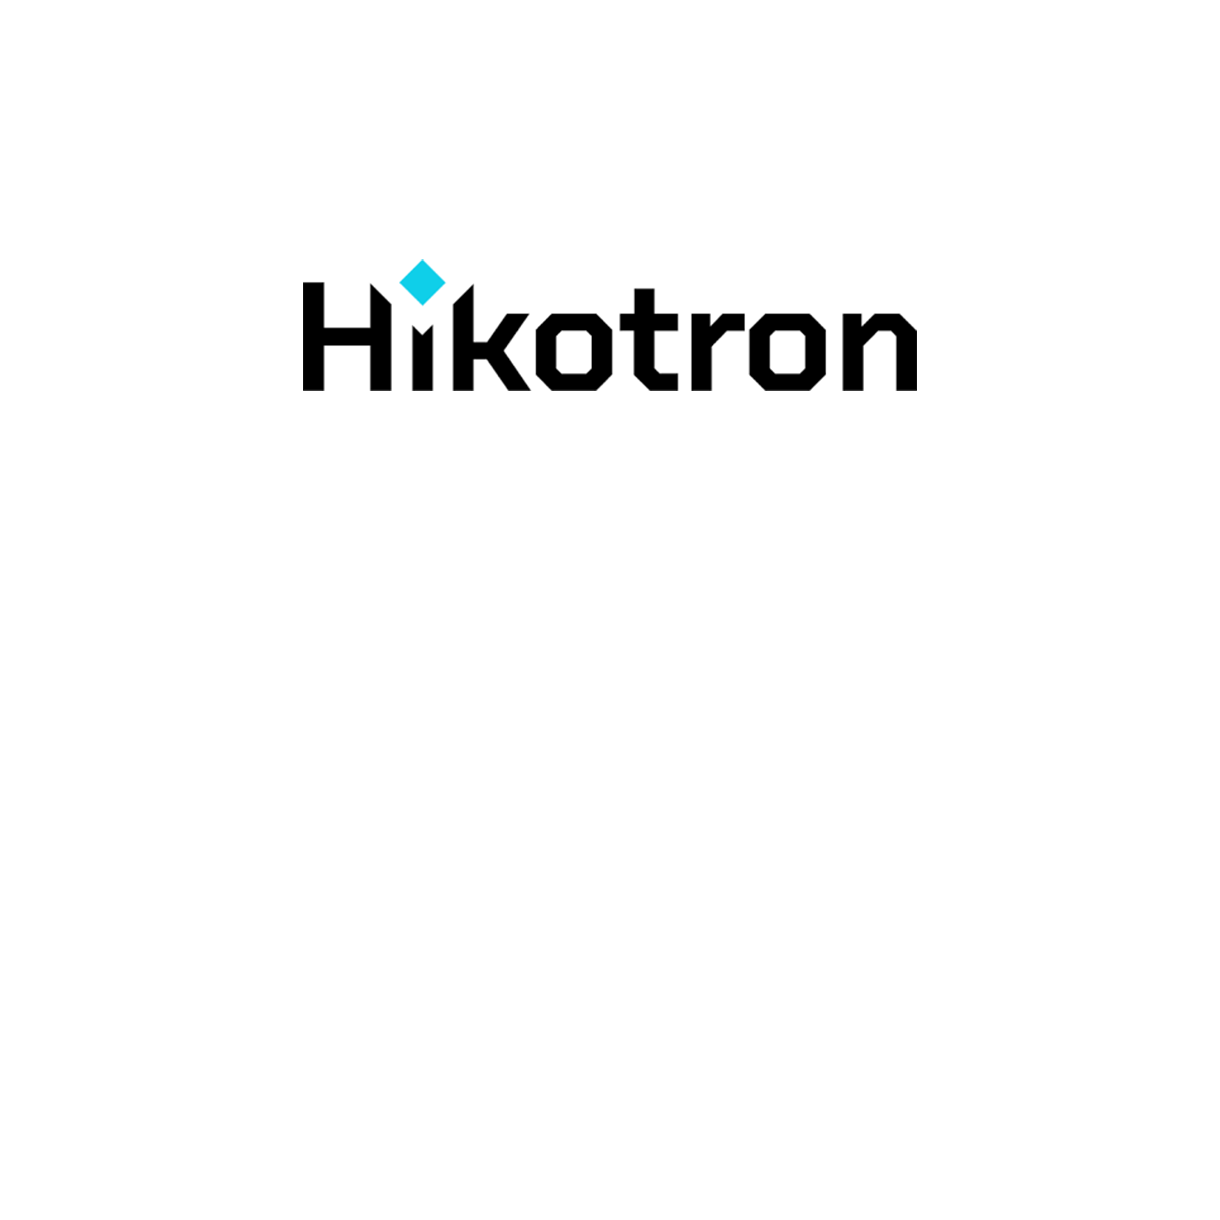 hikotron logo final